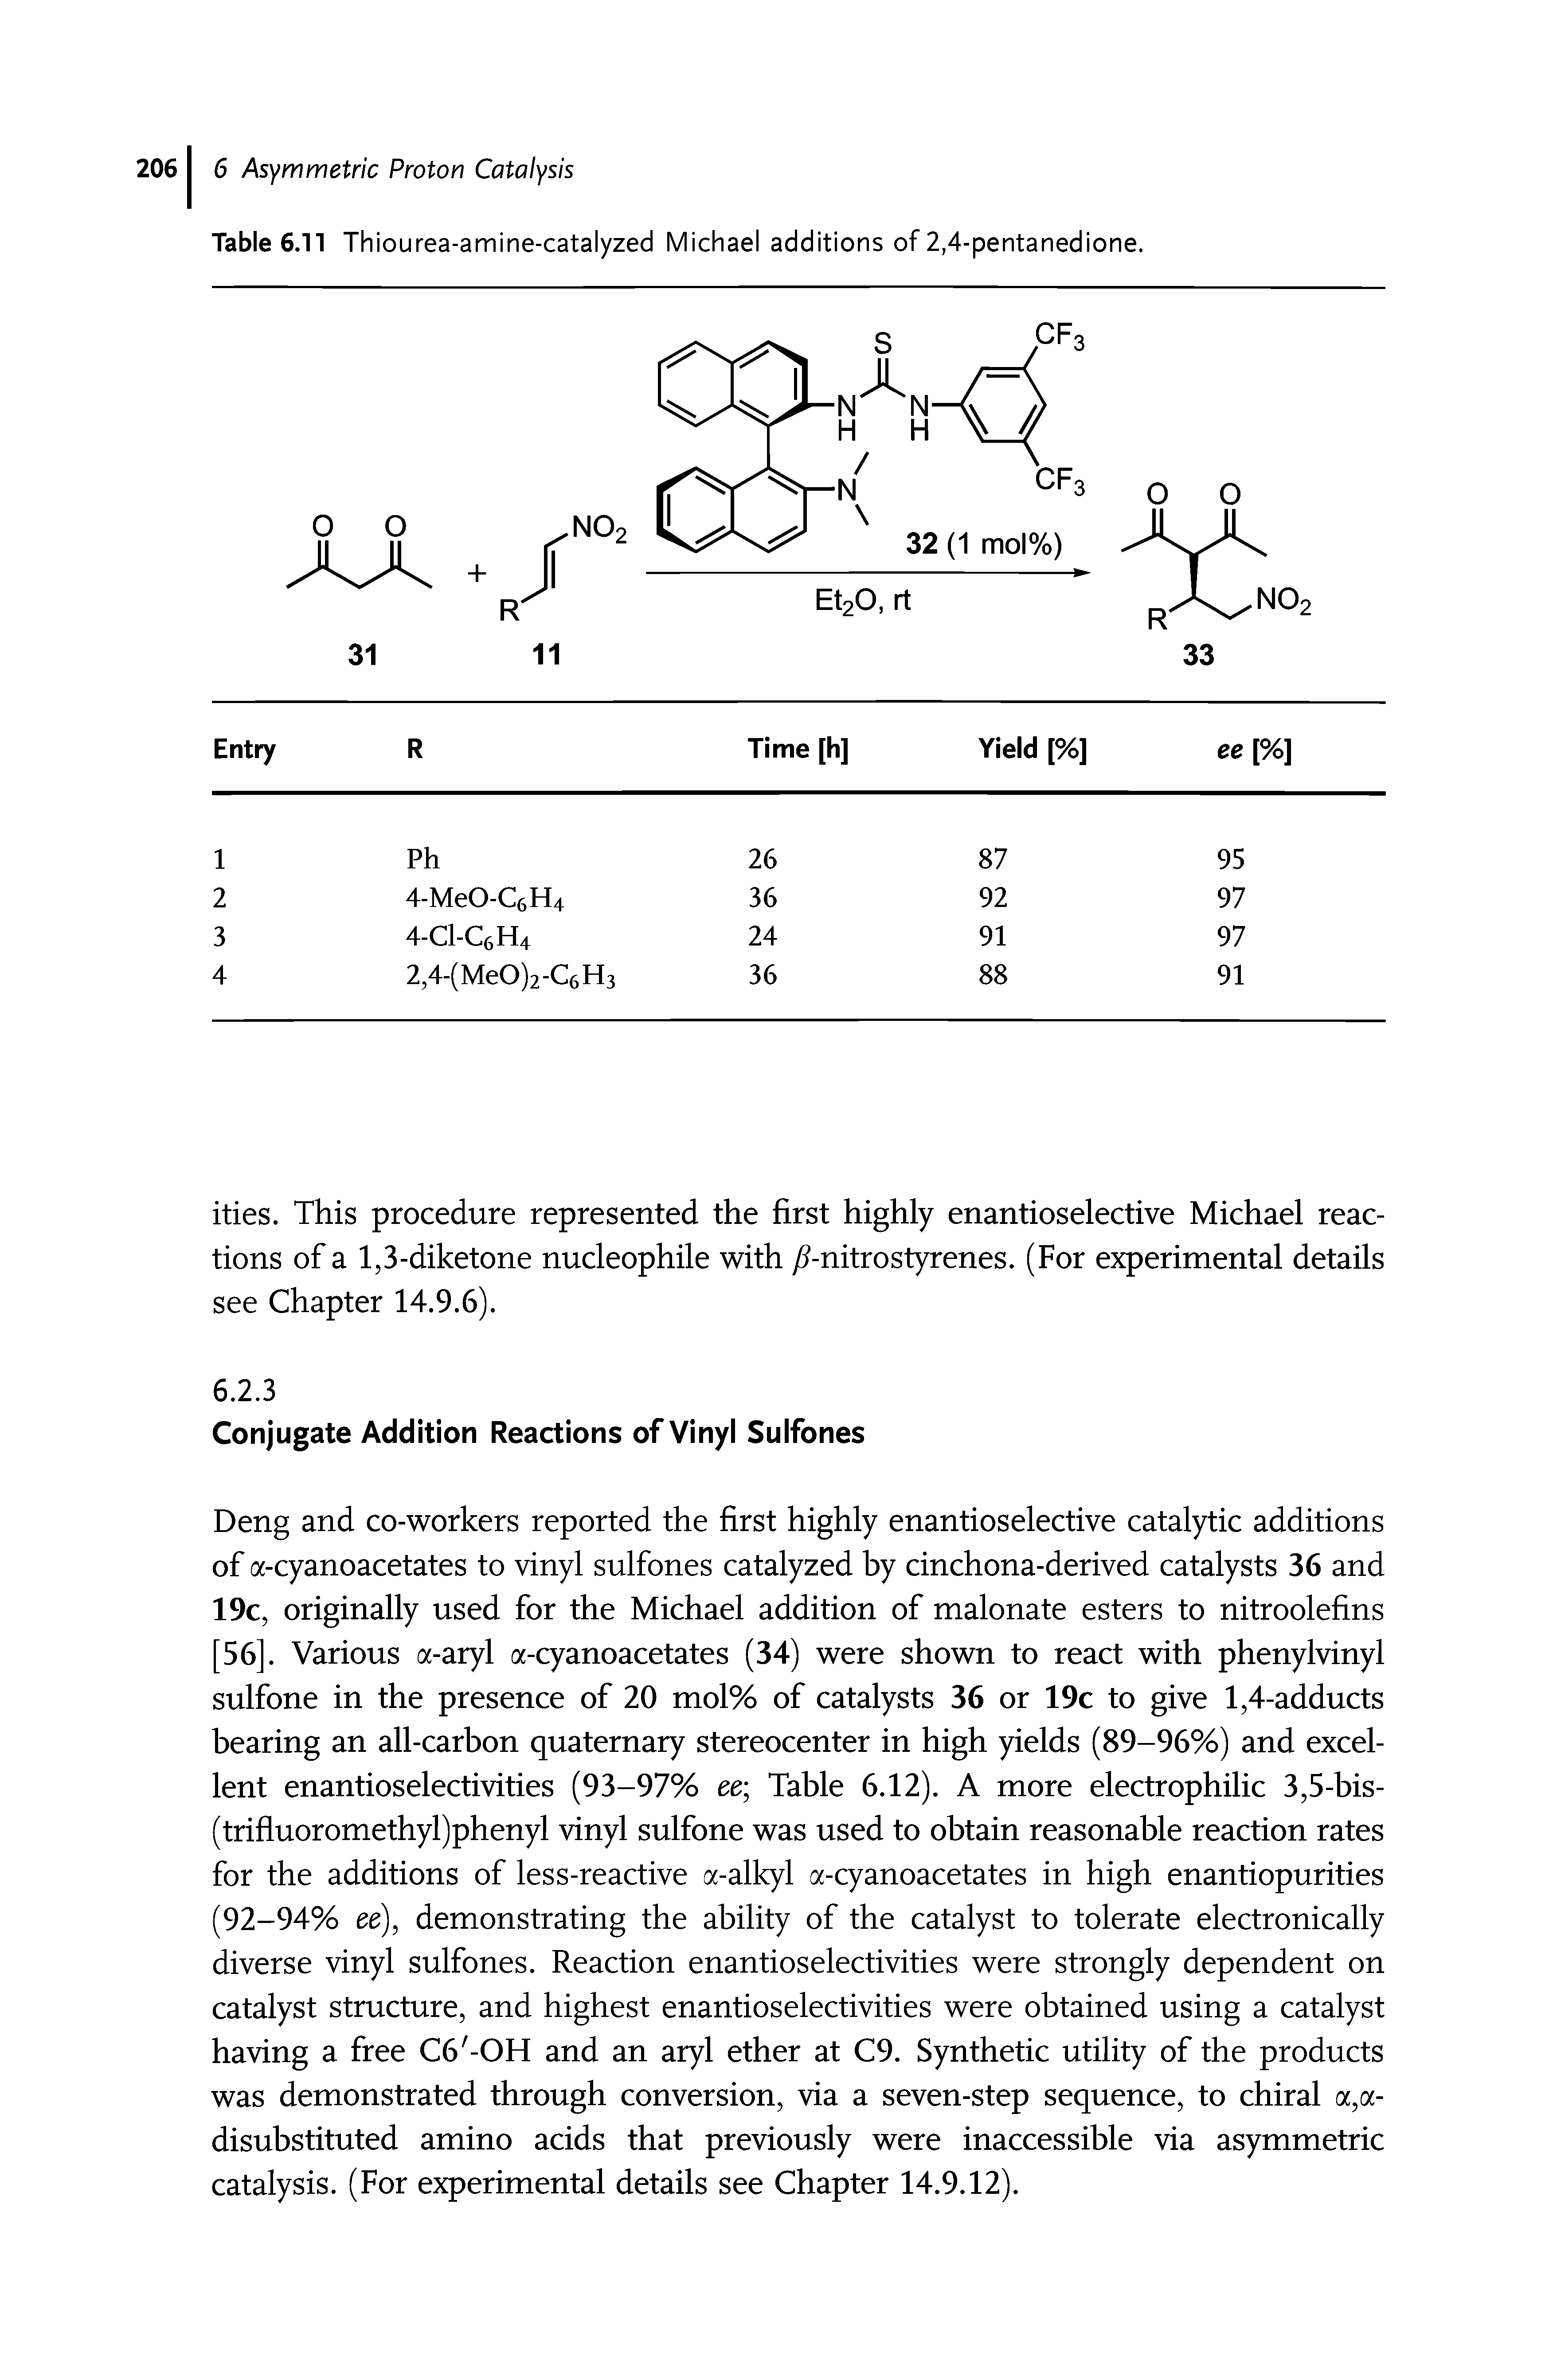 Table 6.11 Thiourea-amine-catalyzed Michael additions of 2,4-pentanedione.